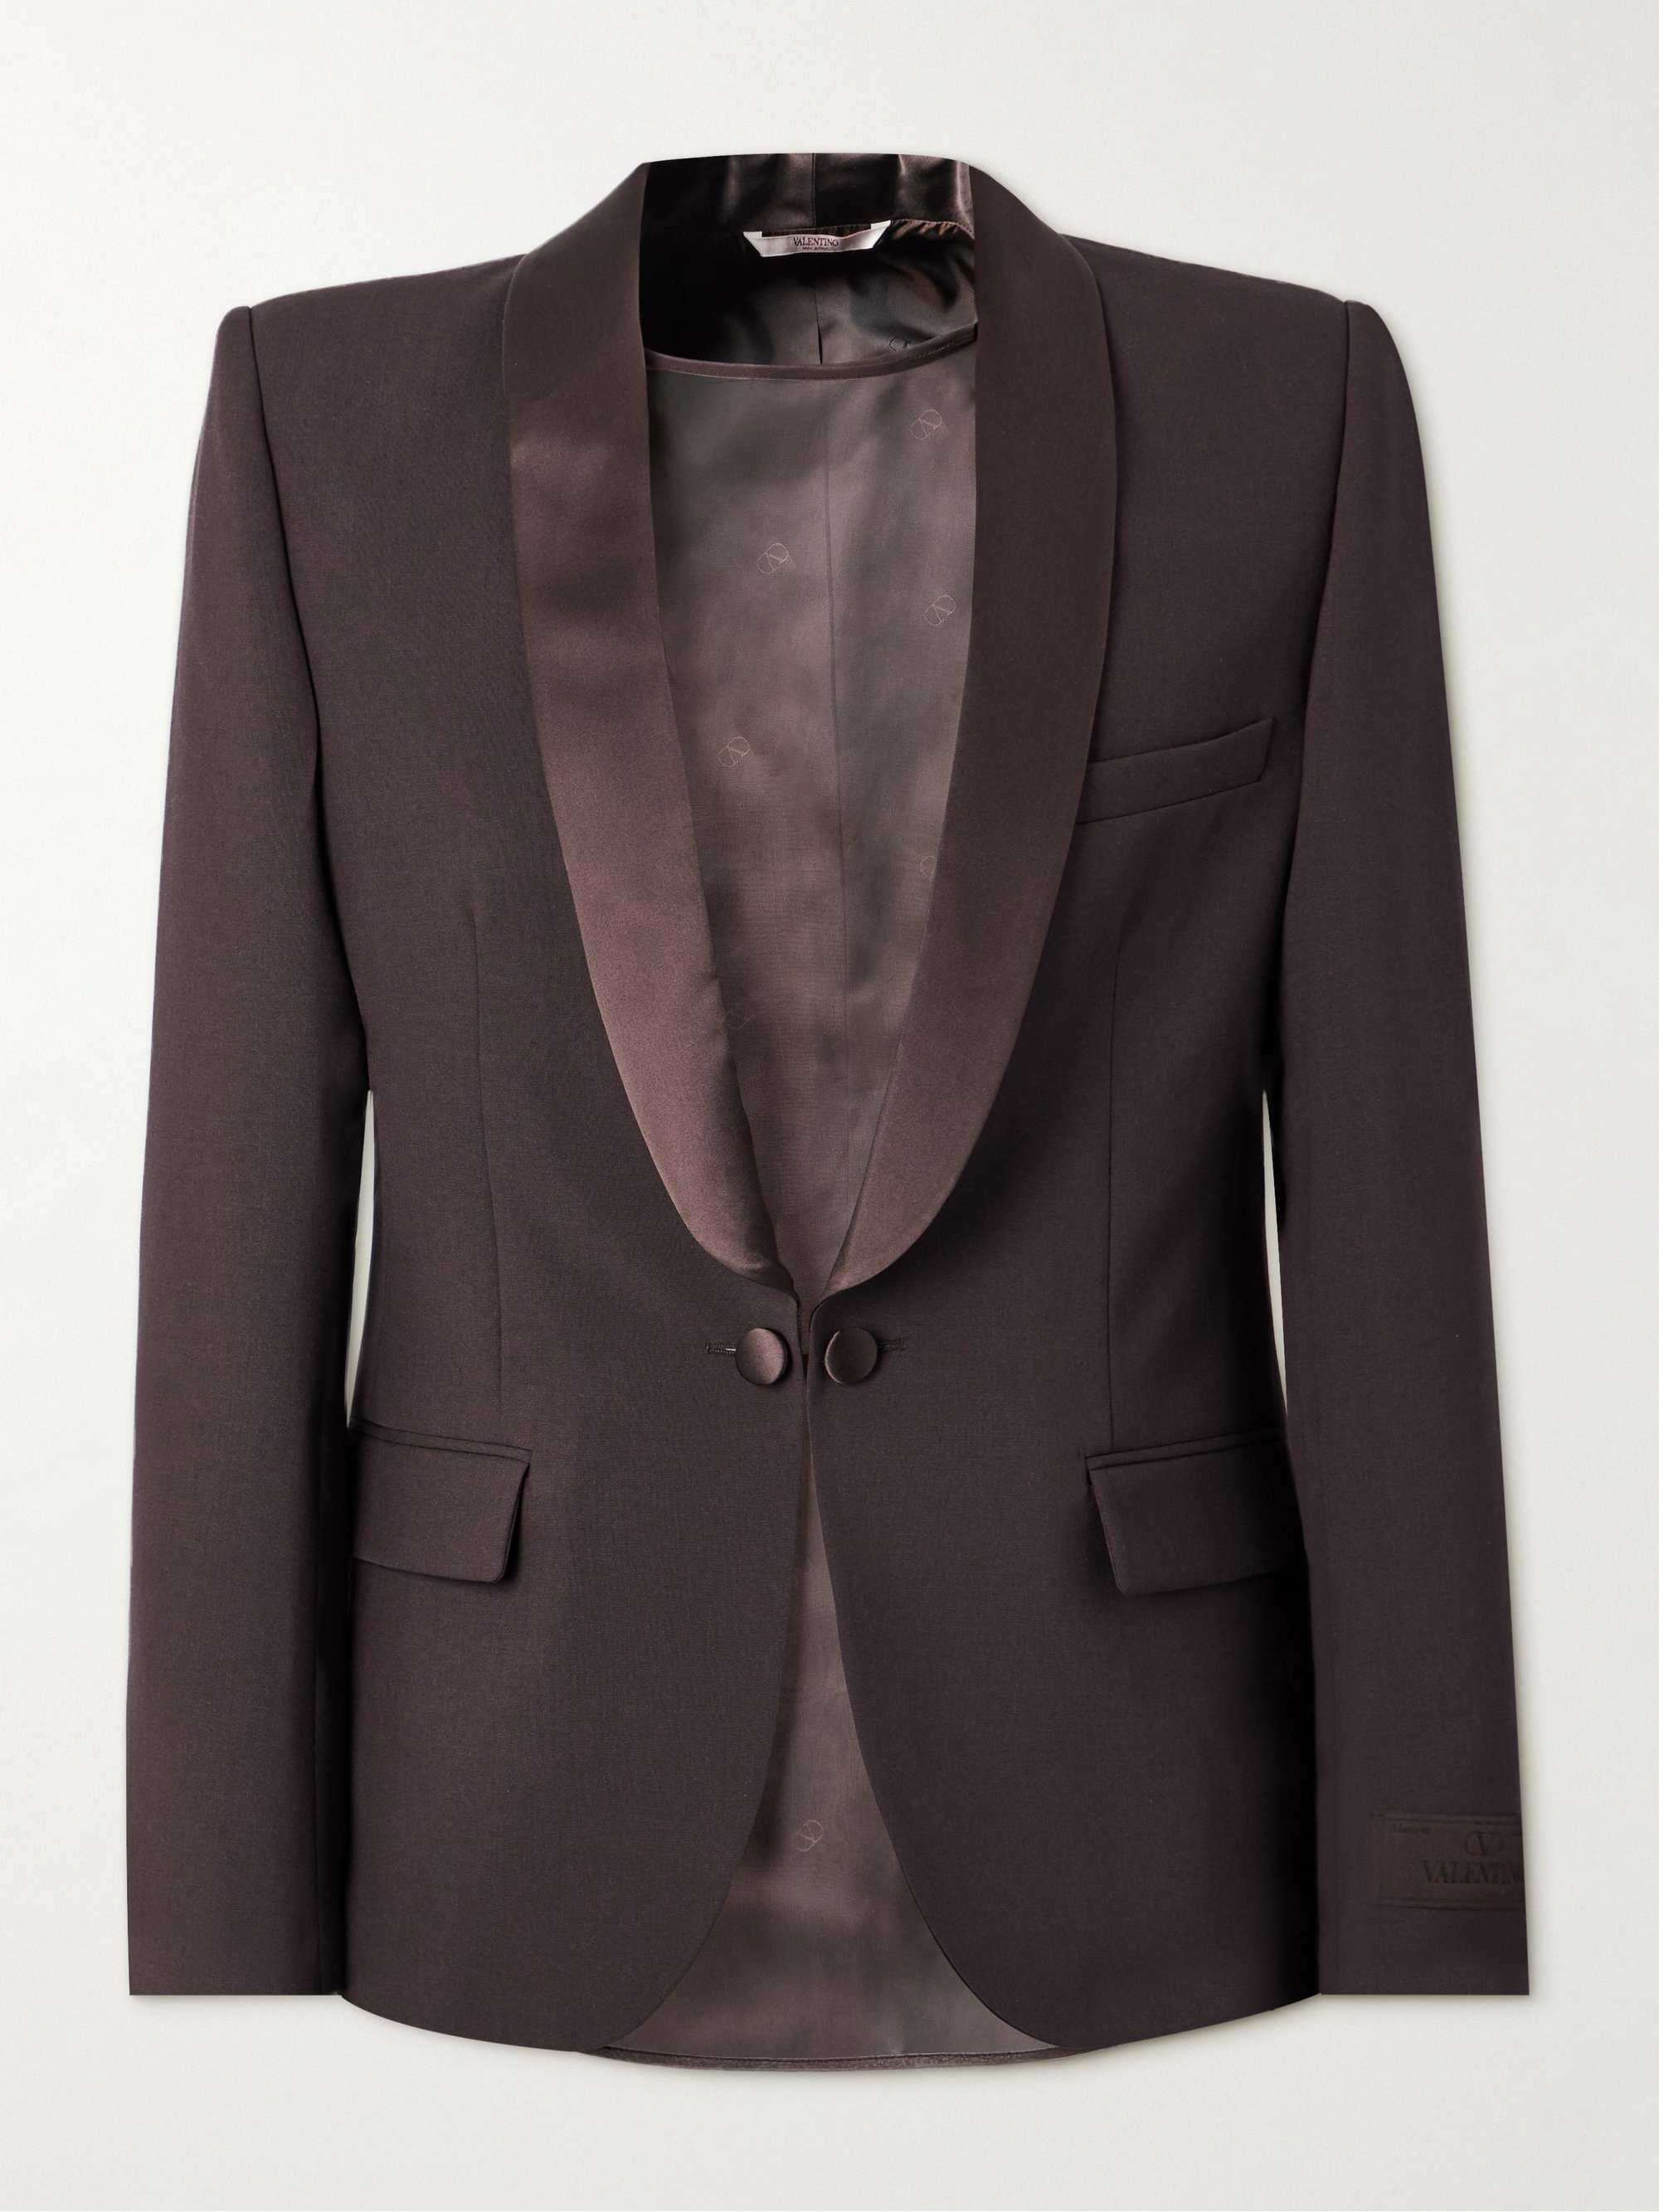 VALENTINO GARAVANI Satin-Trimmed Wool-Blend Blazer for Men | MR PORTER